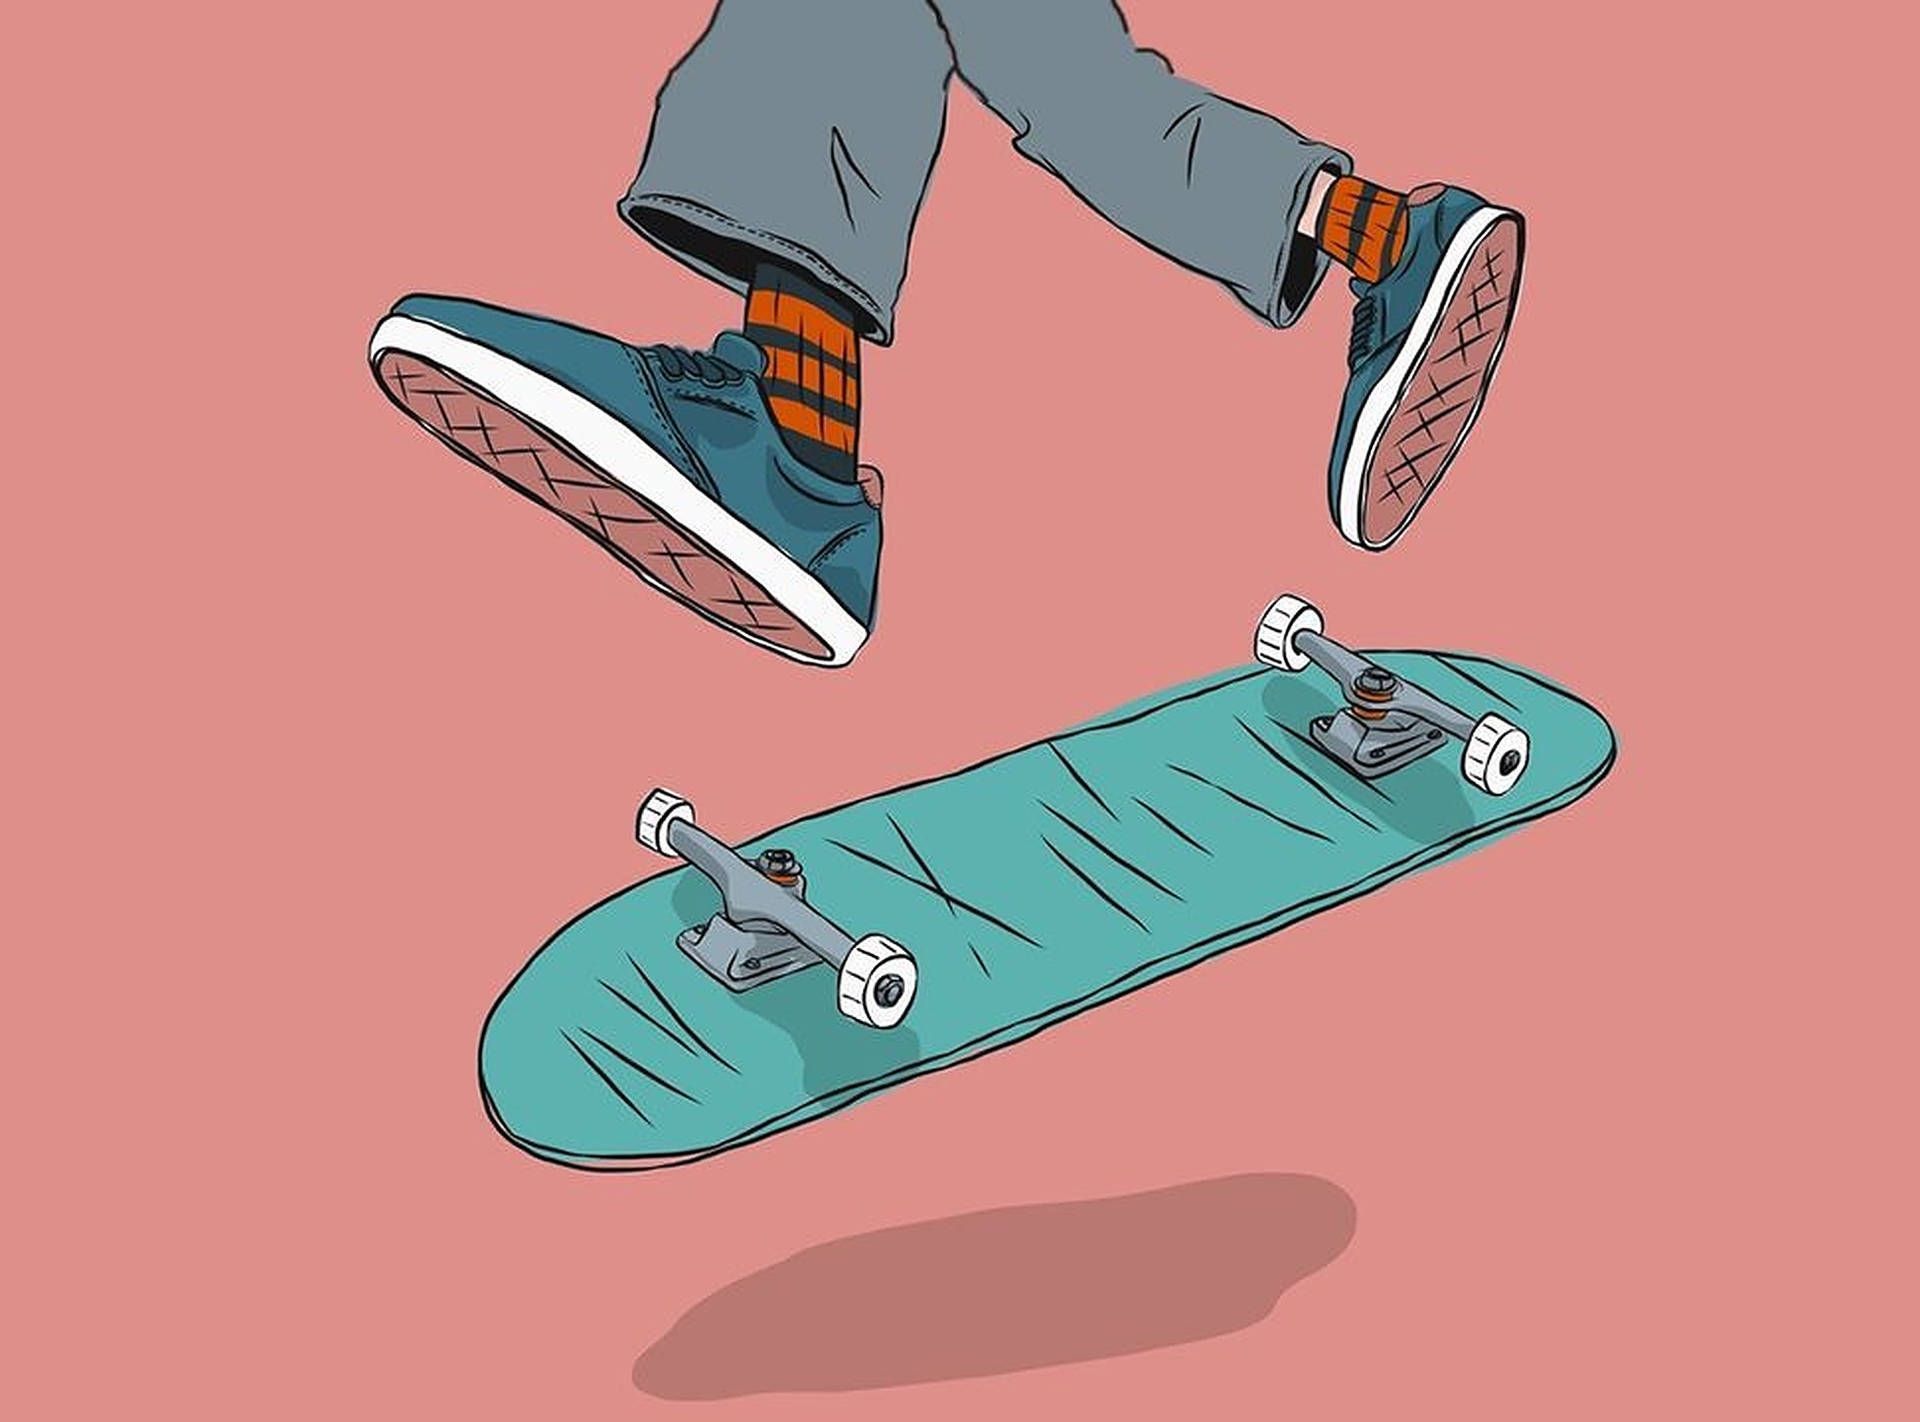 Free Skater Boy Aesthetic Wallpaper Downloads, Skater Boy Aesthetic Wallpaper for FREE